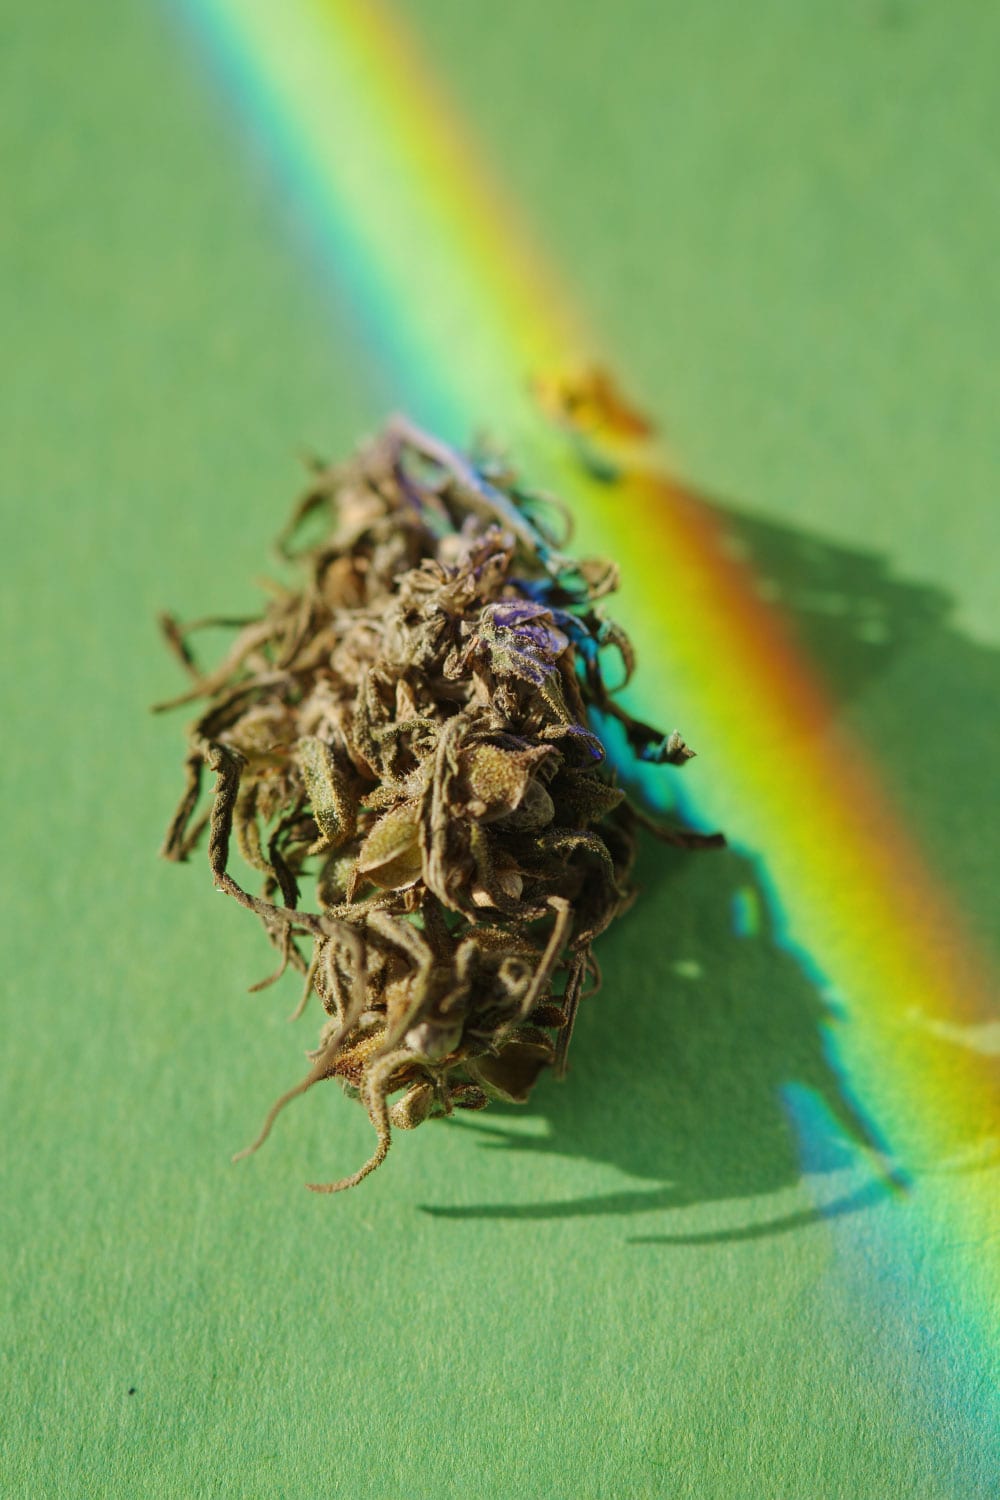 Buds of CBD - Grass in colorful rainbow lighting